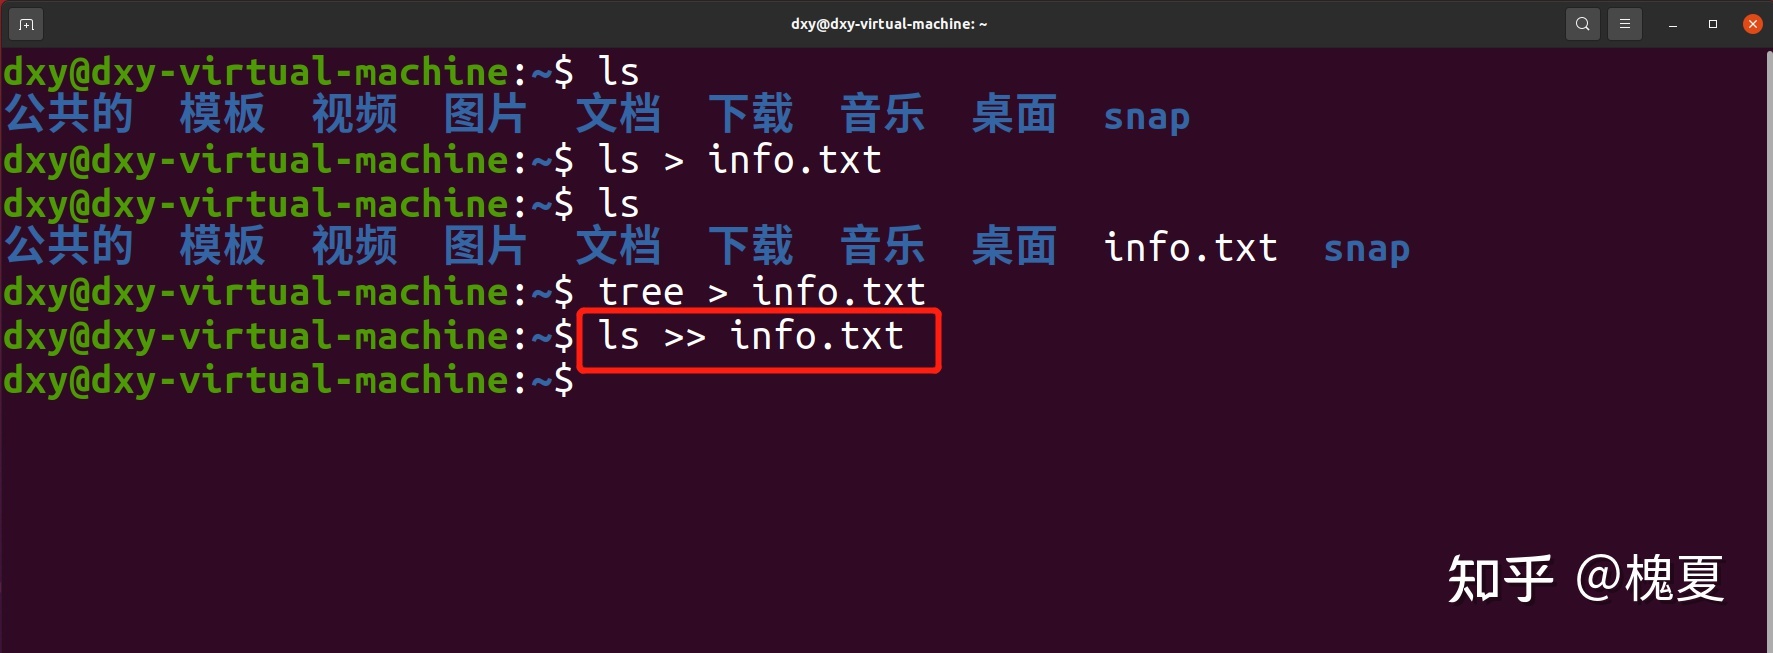 linux启动tor 命令_linux启动服务命令_linux设置命令行启动